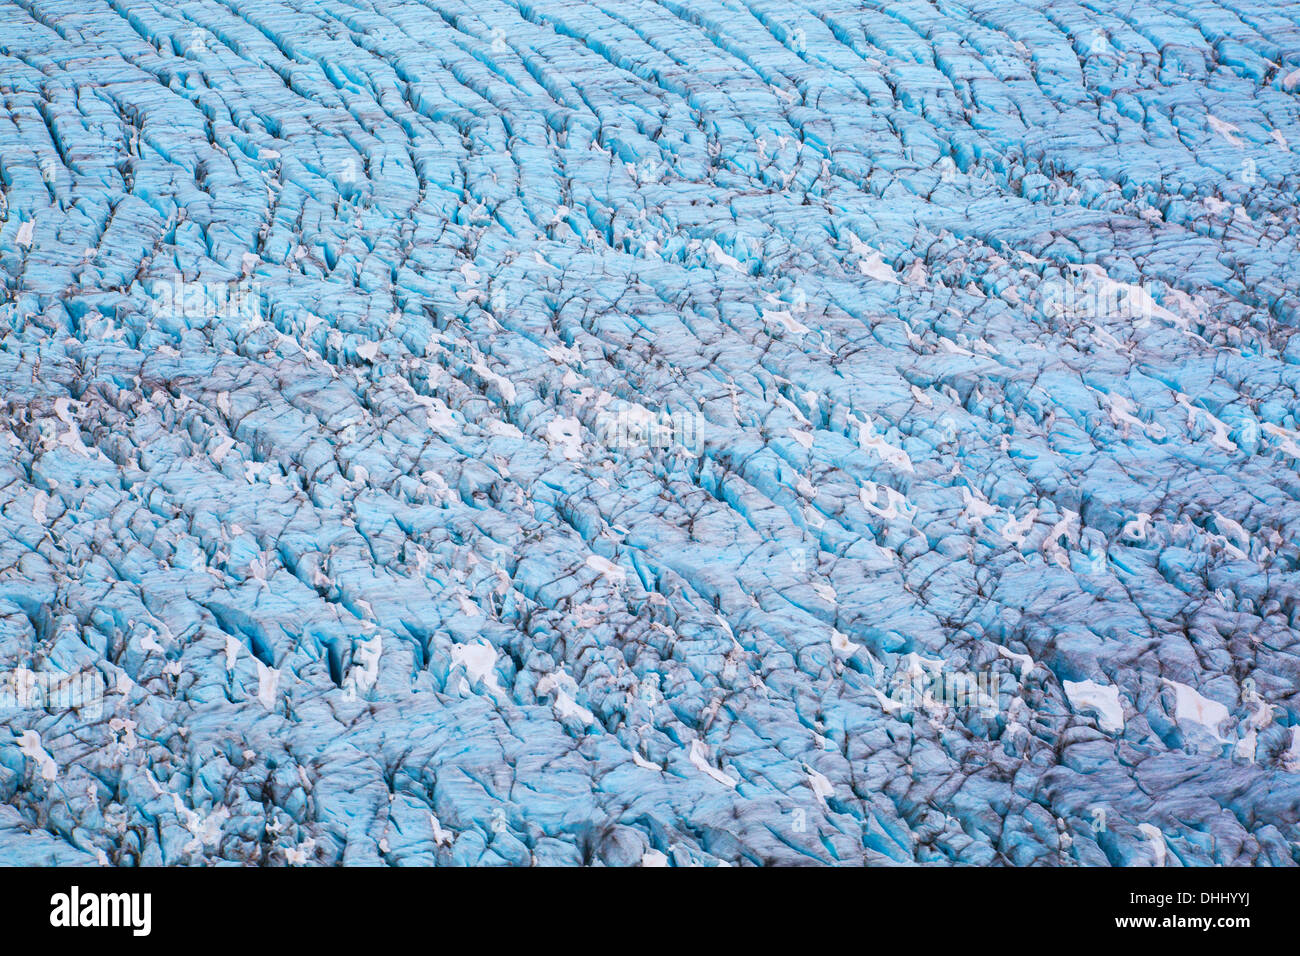 Mendenhall Glacier, Alaska, USA Stock Photo